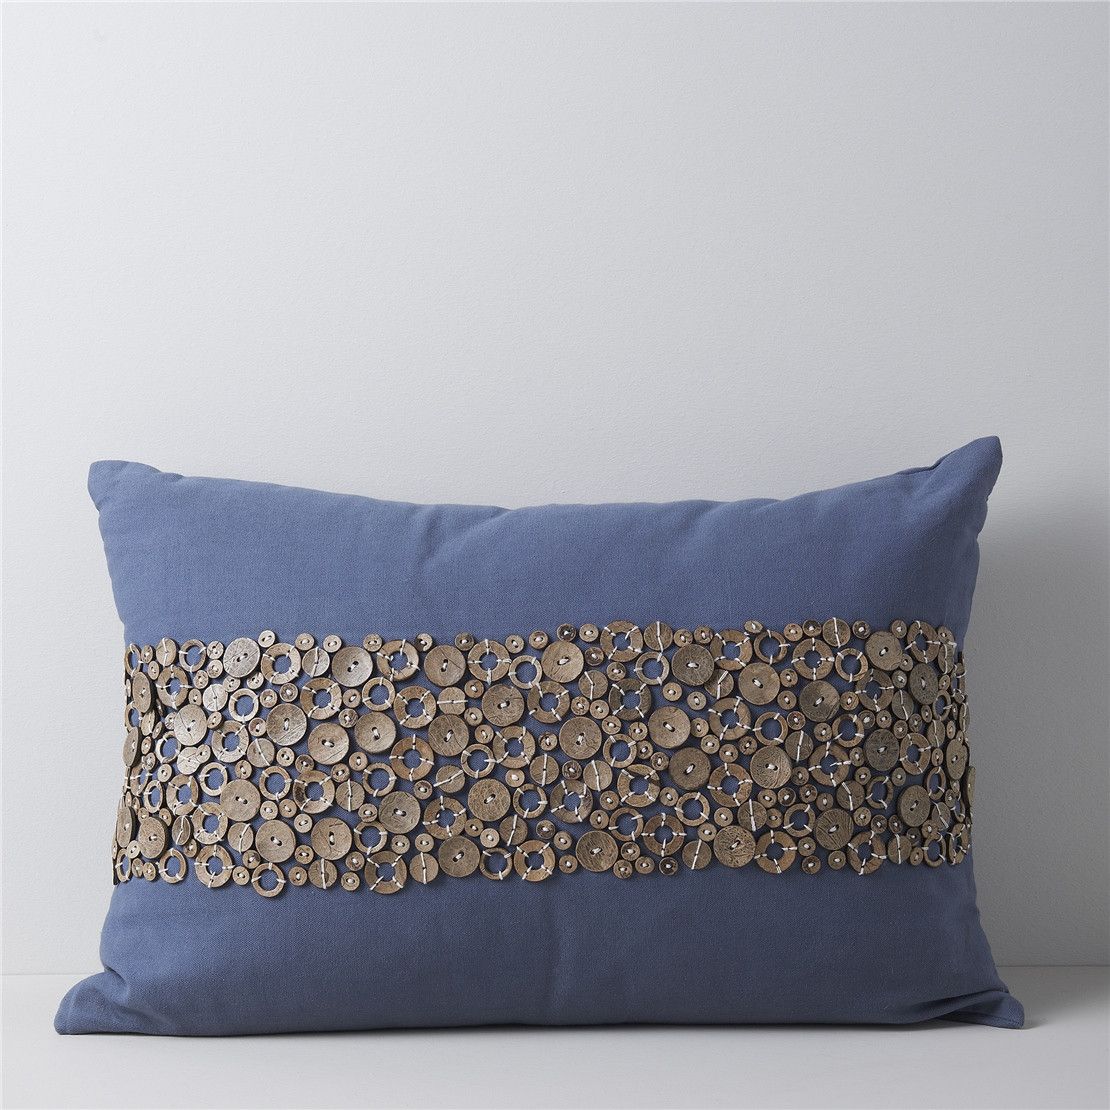 Декоративна подушка ручної роботи дизайн гудзики 40*60 Petra синя